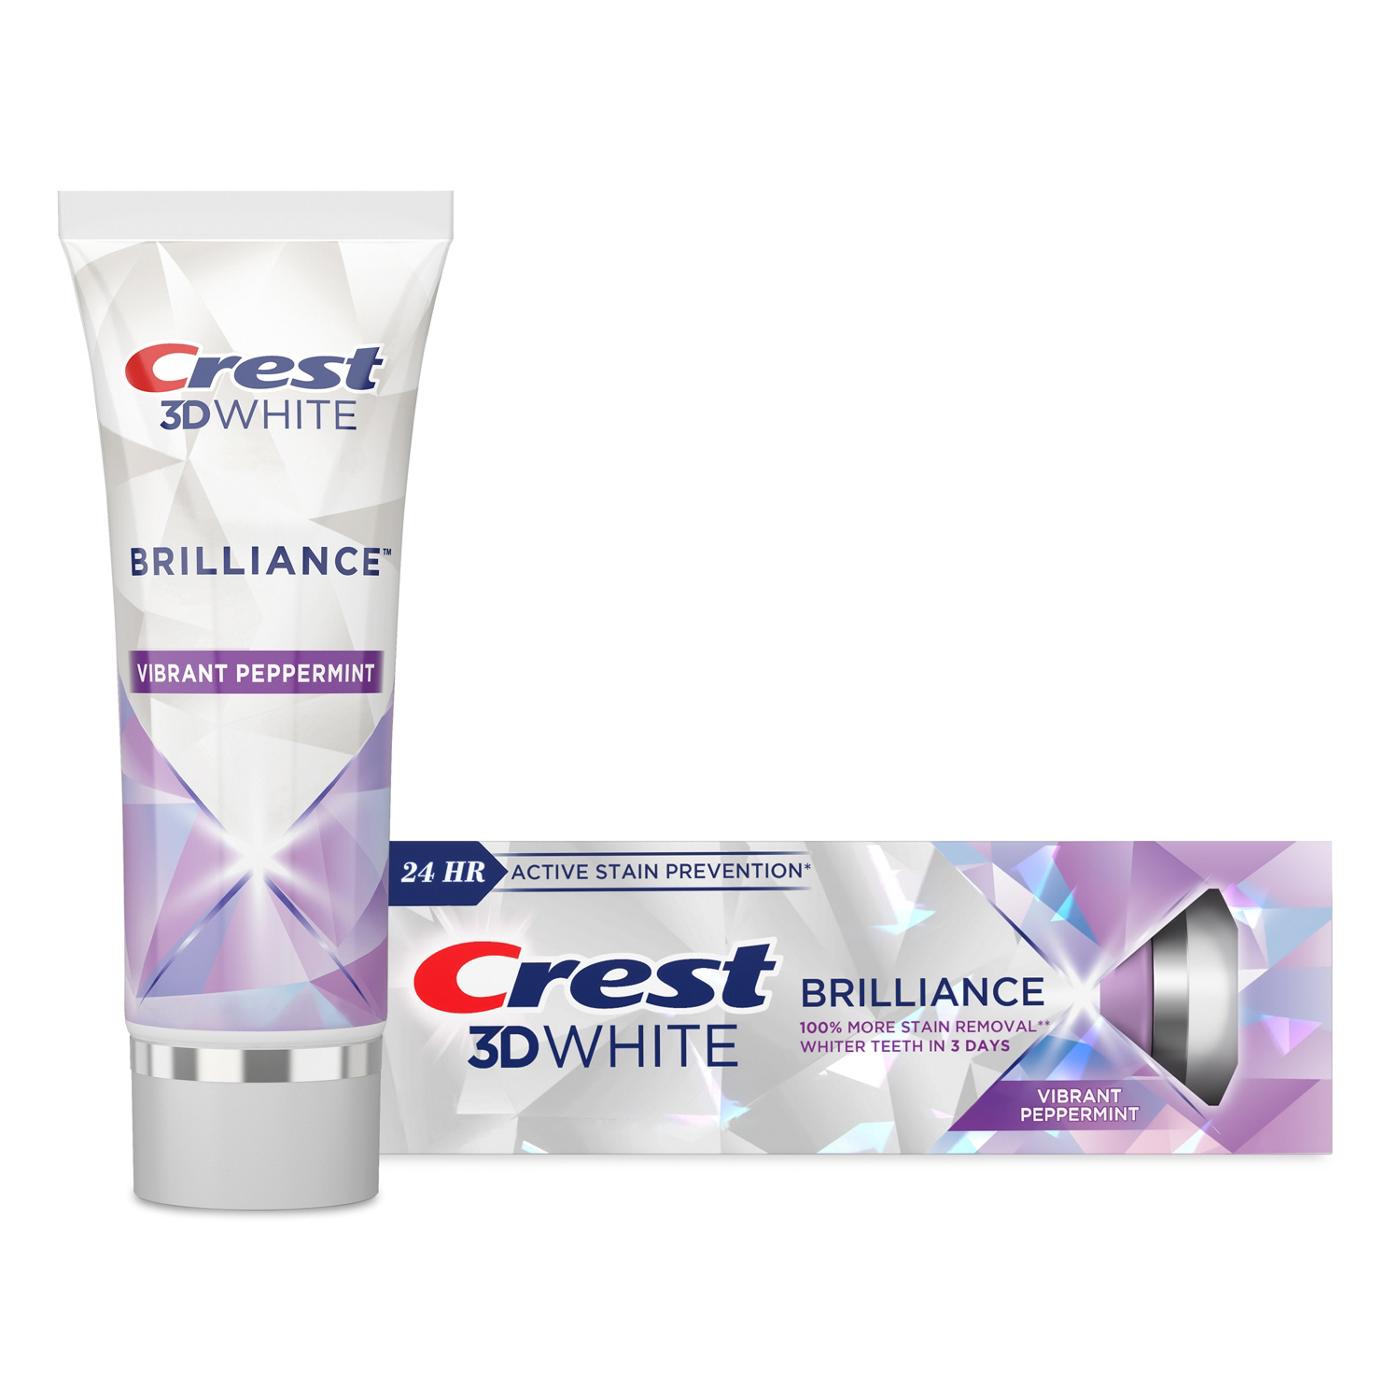 Crest 3D White Brilliance - Vibrant Peppermint; image 2 of 8